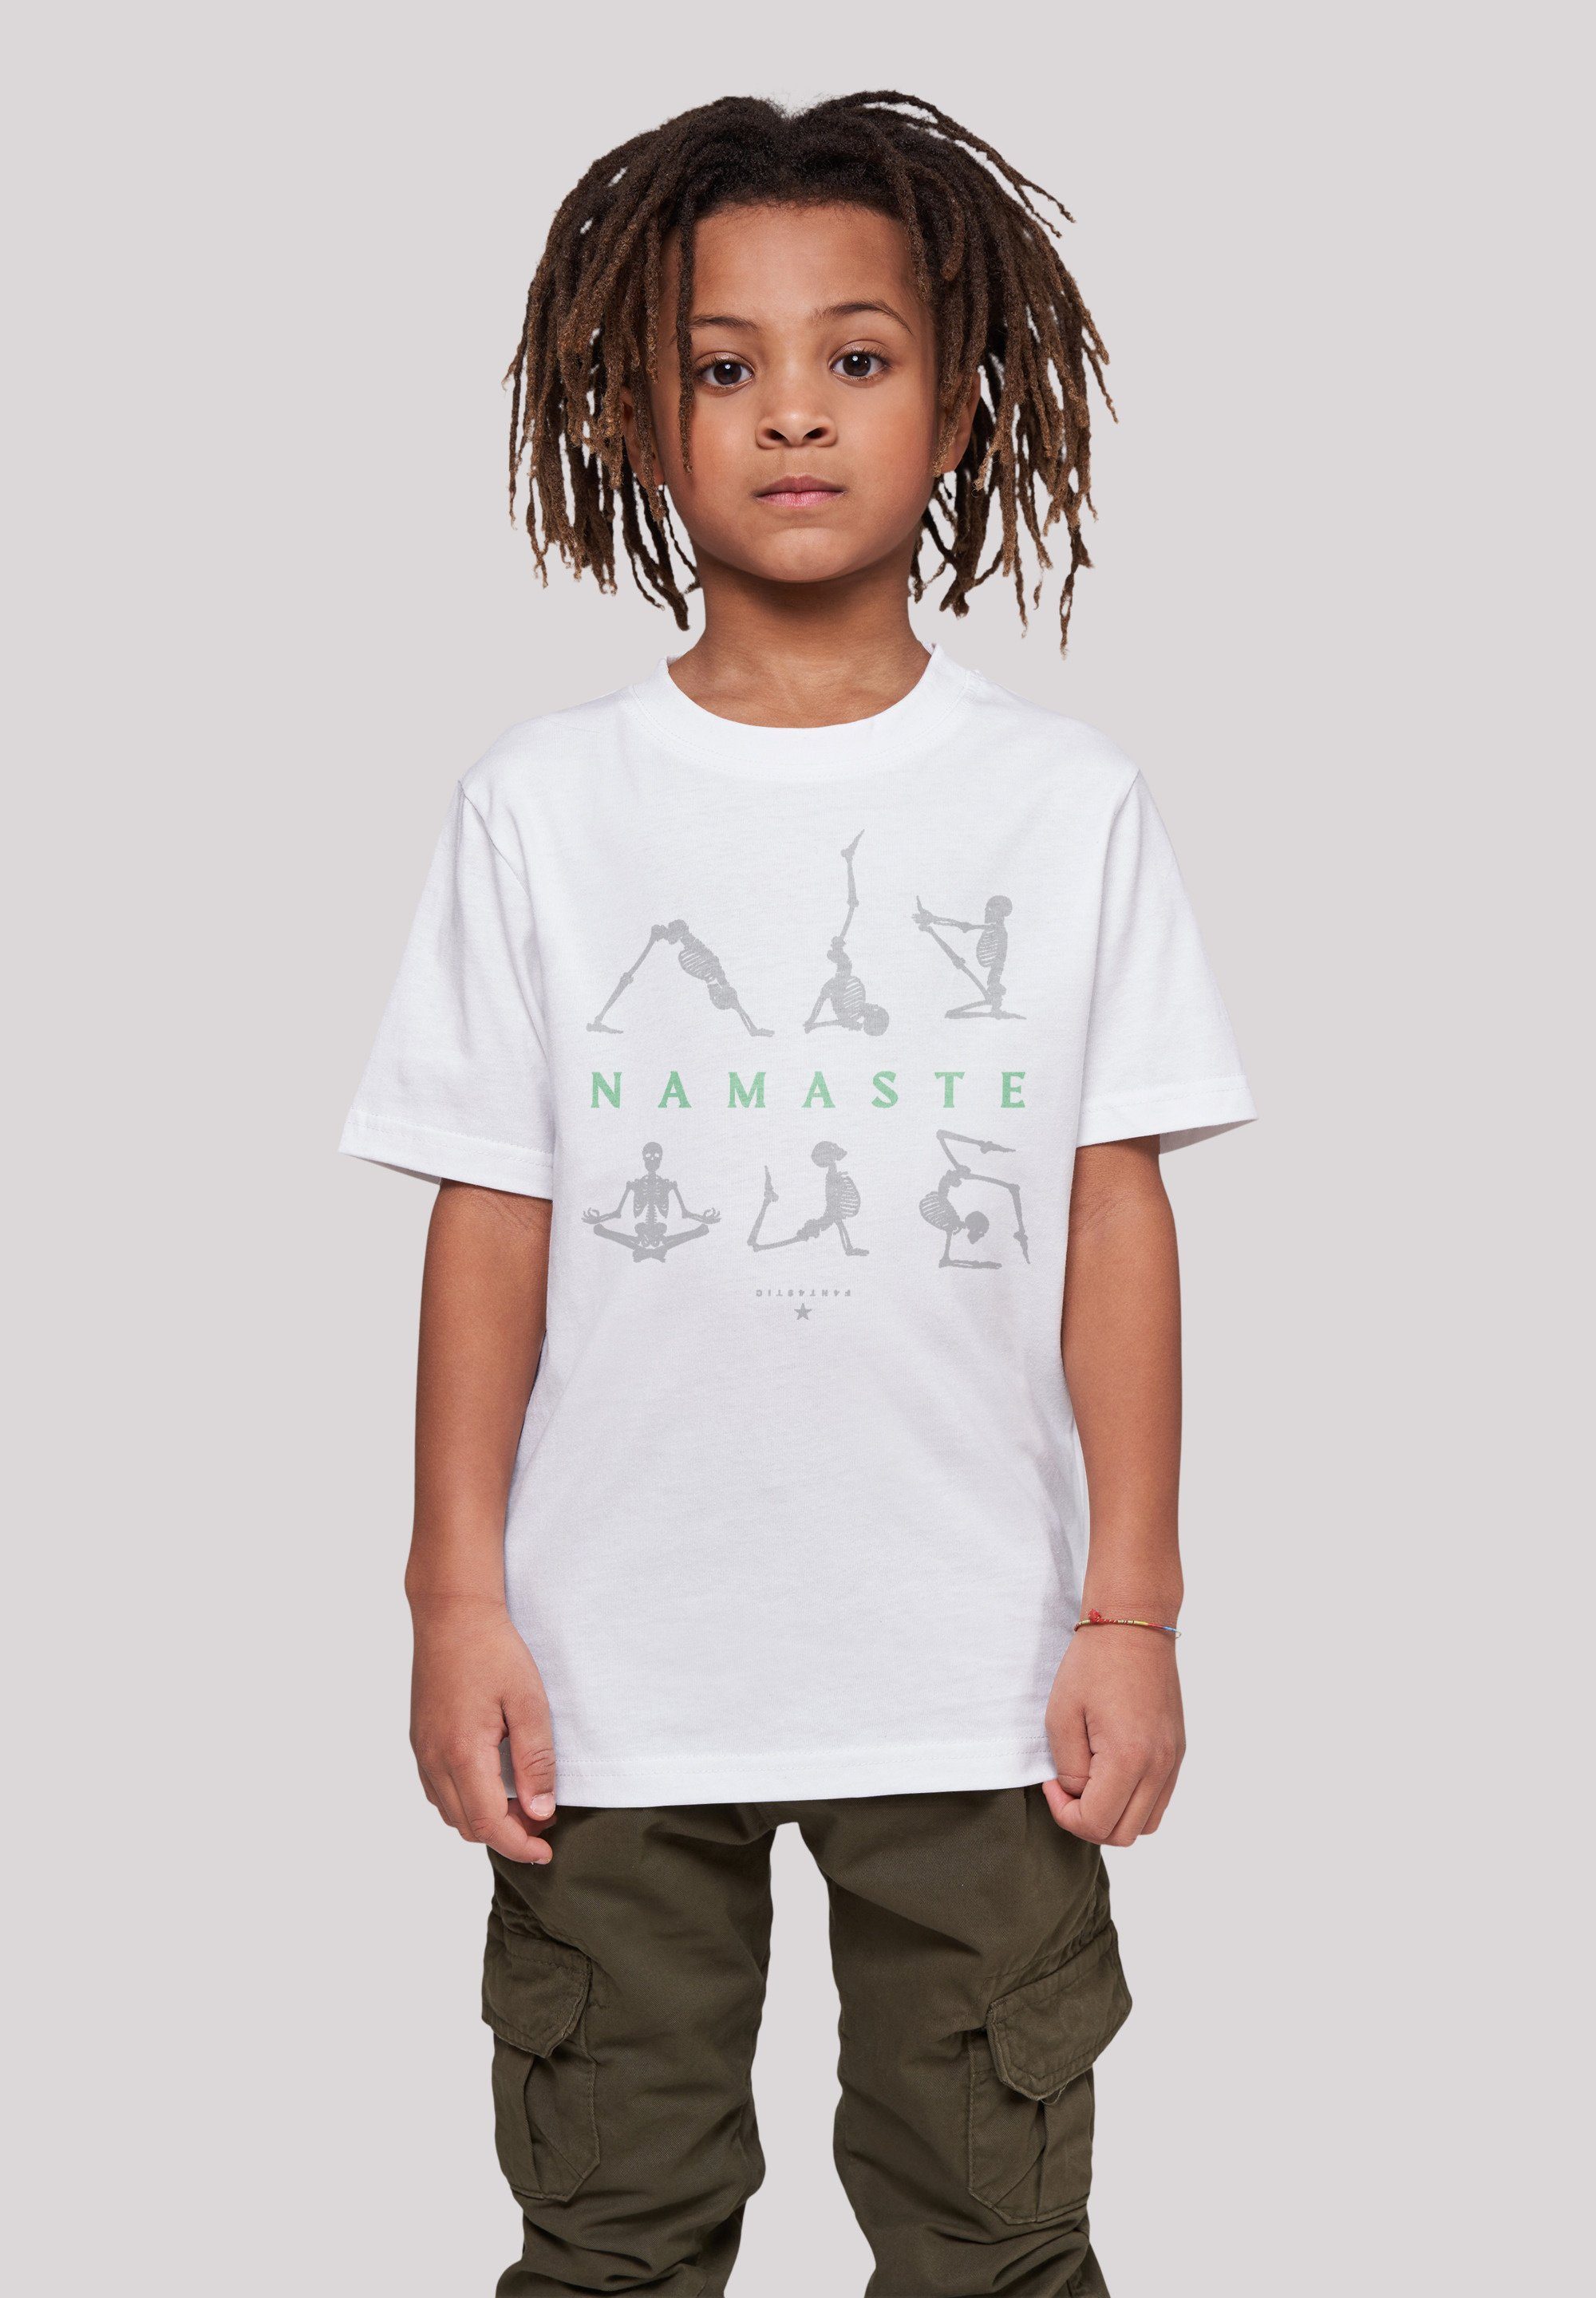 F4NT4STIC T-Shirt Namaste Yoga Skelett Halloween Print weiß